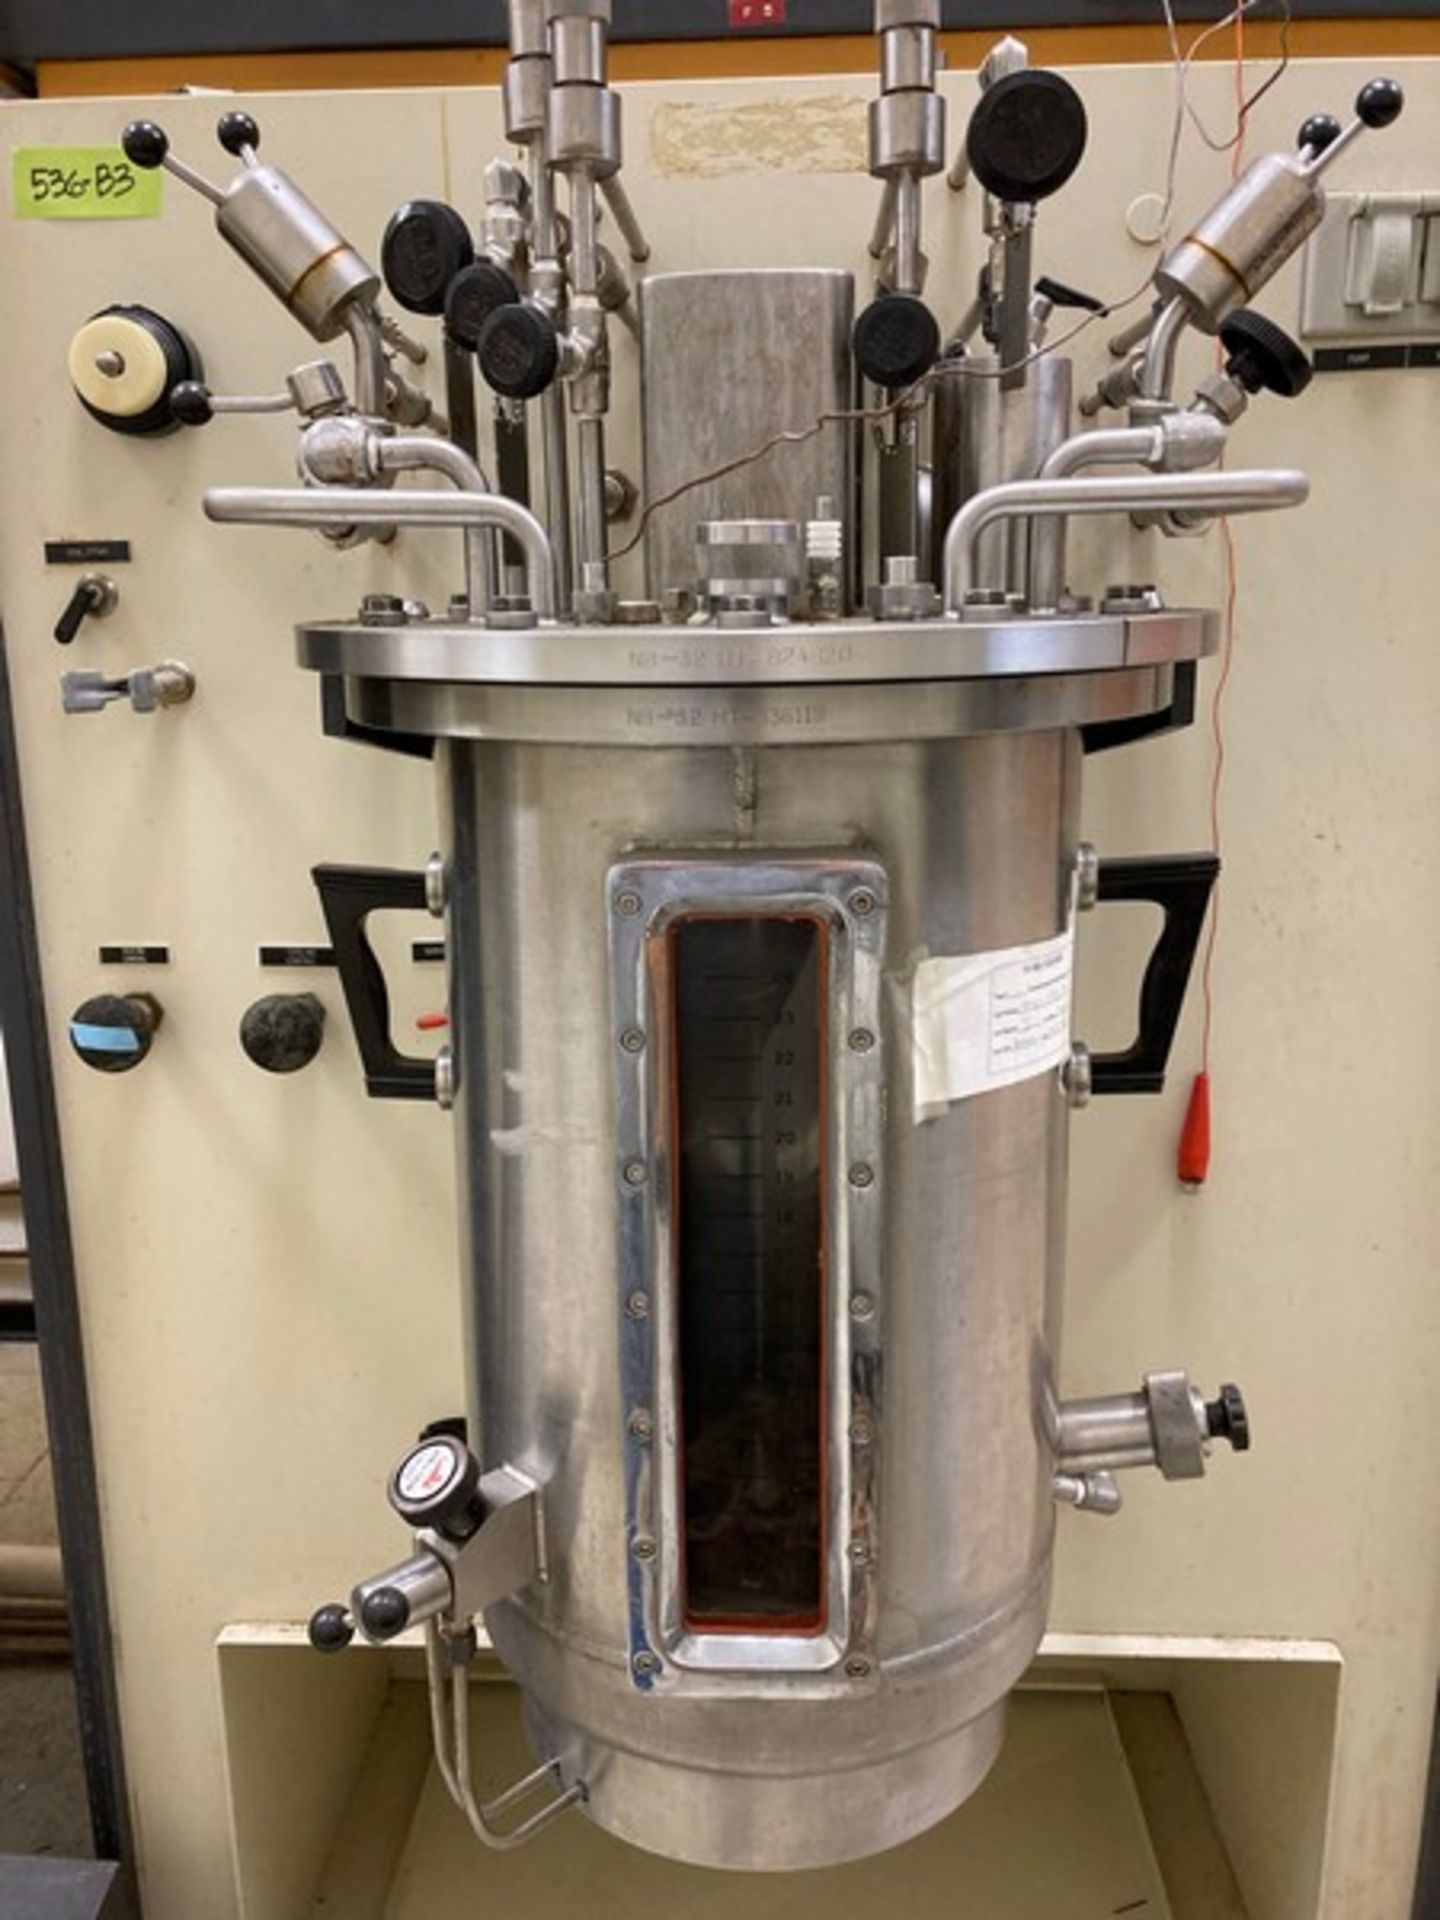 3 units - MicroFerm Firmentor - New Brunswick Scientific Co., Inc, Model #MF 1285, 115V, Phase 1 - Image 4 of 7